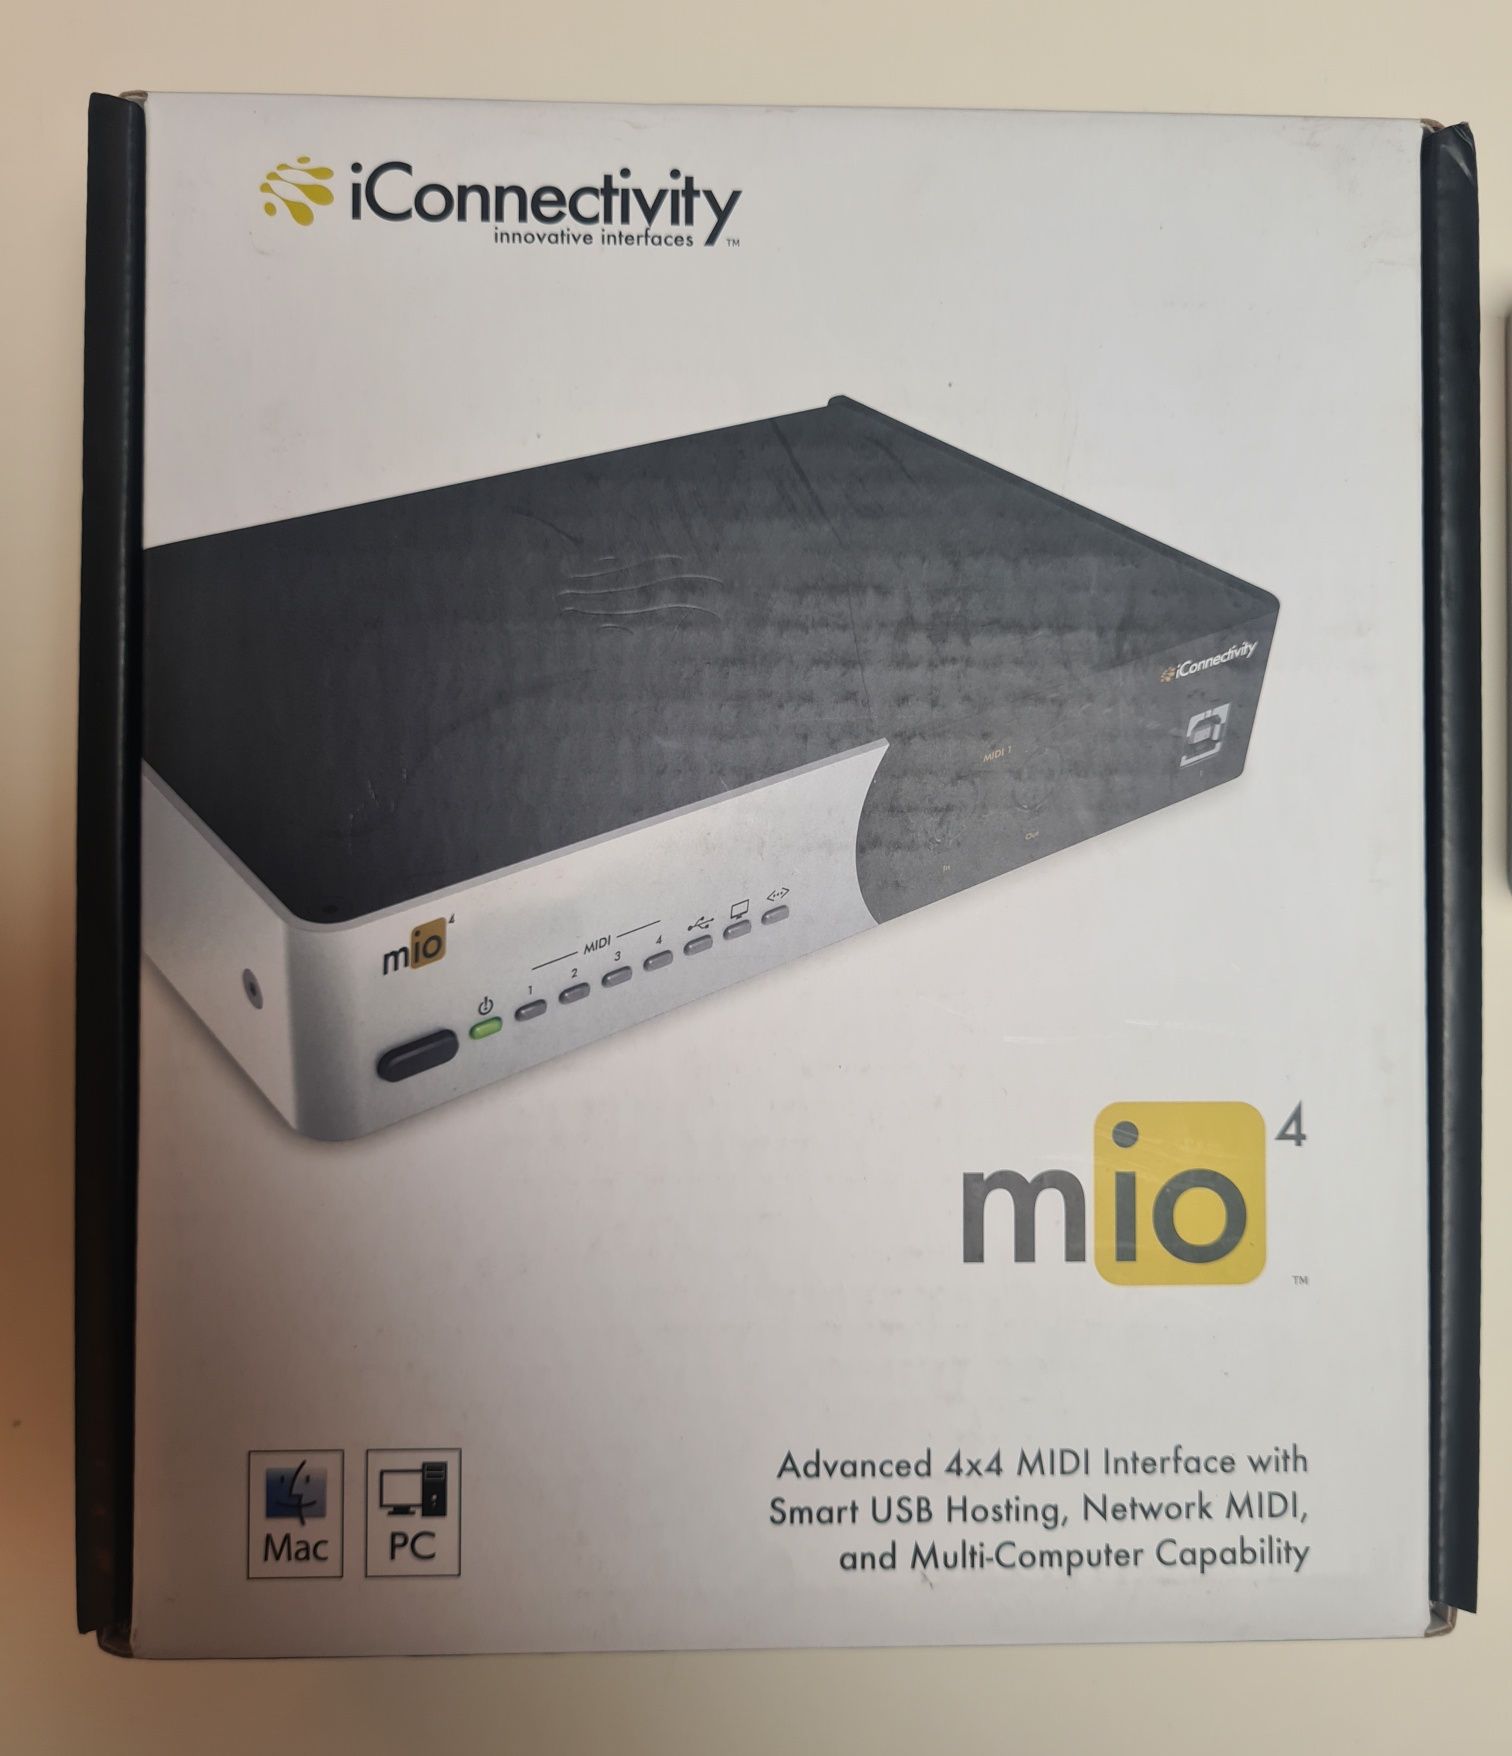 iConnectivity mio4 4x4 MIDI Interface